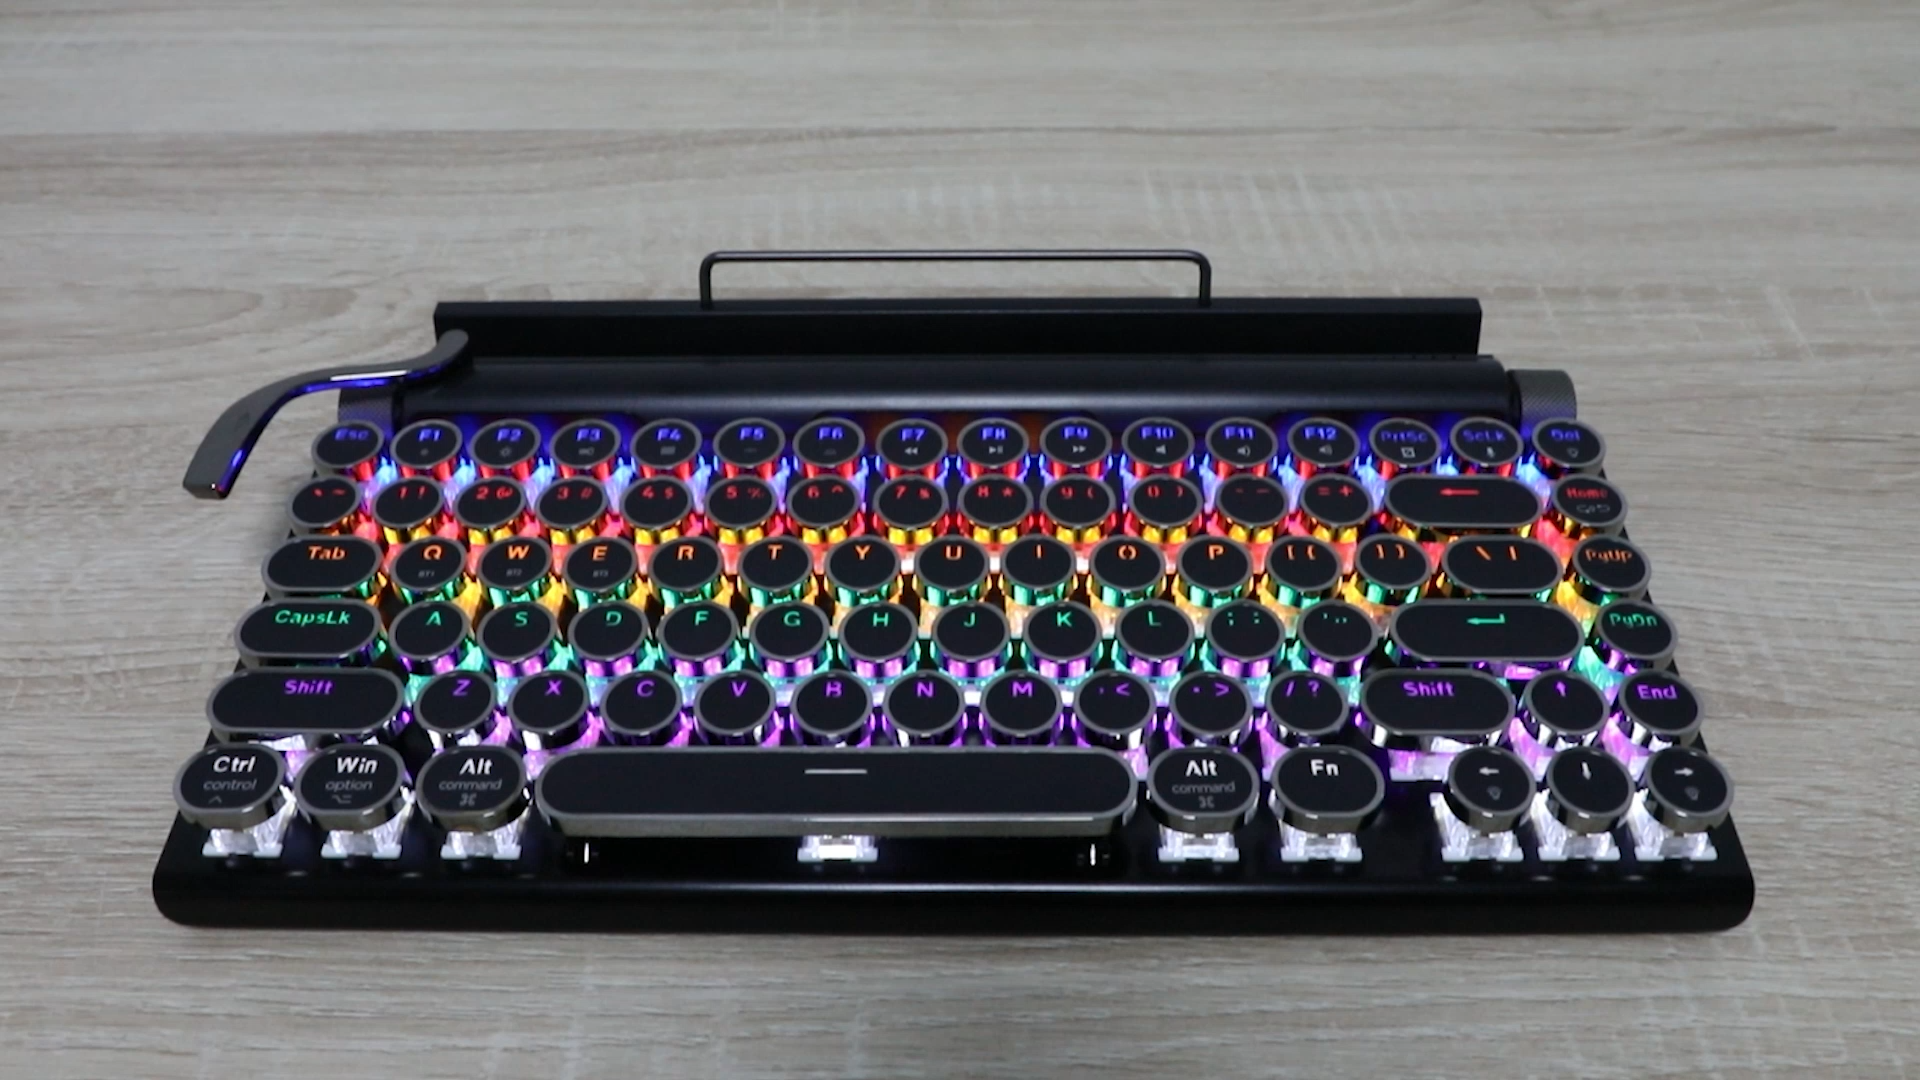 Keyceo gaming keyboards